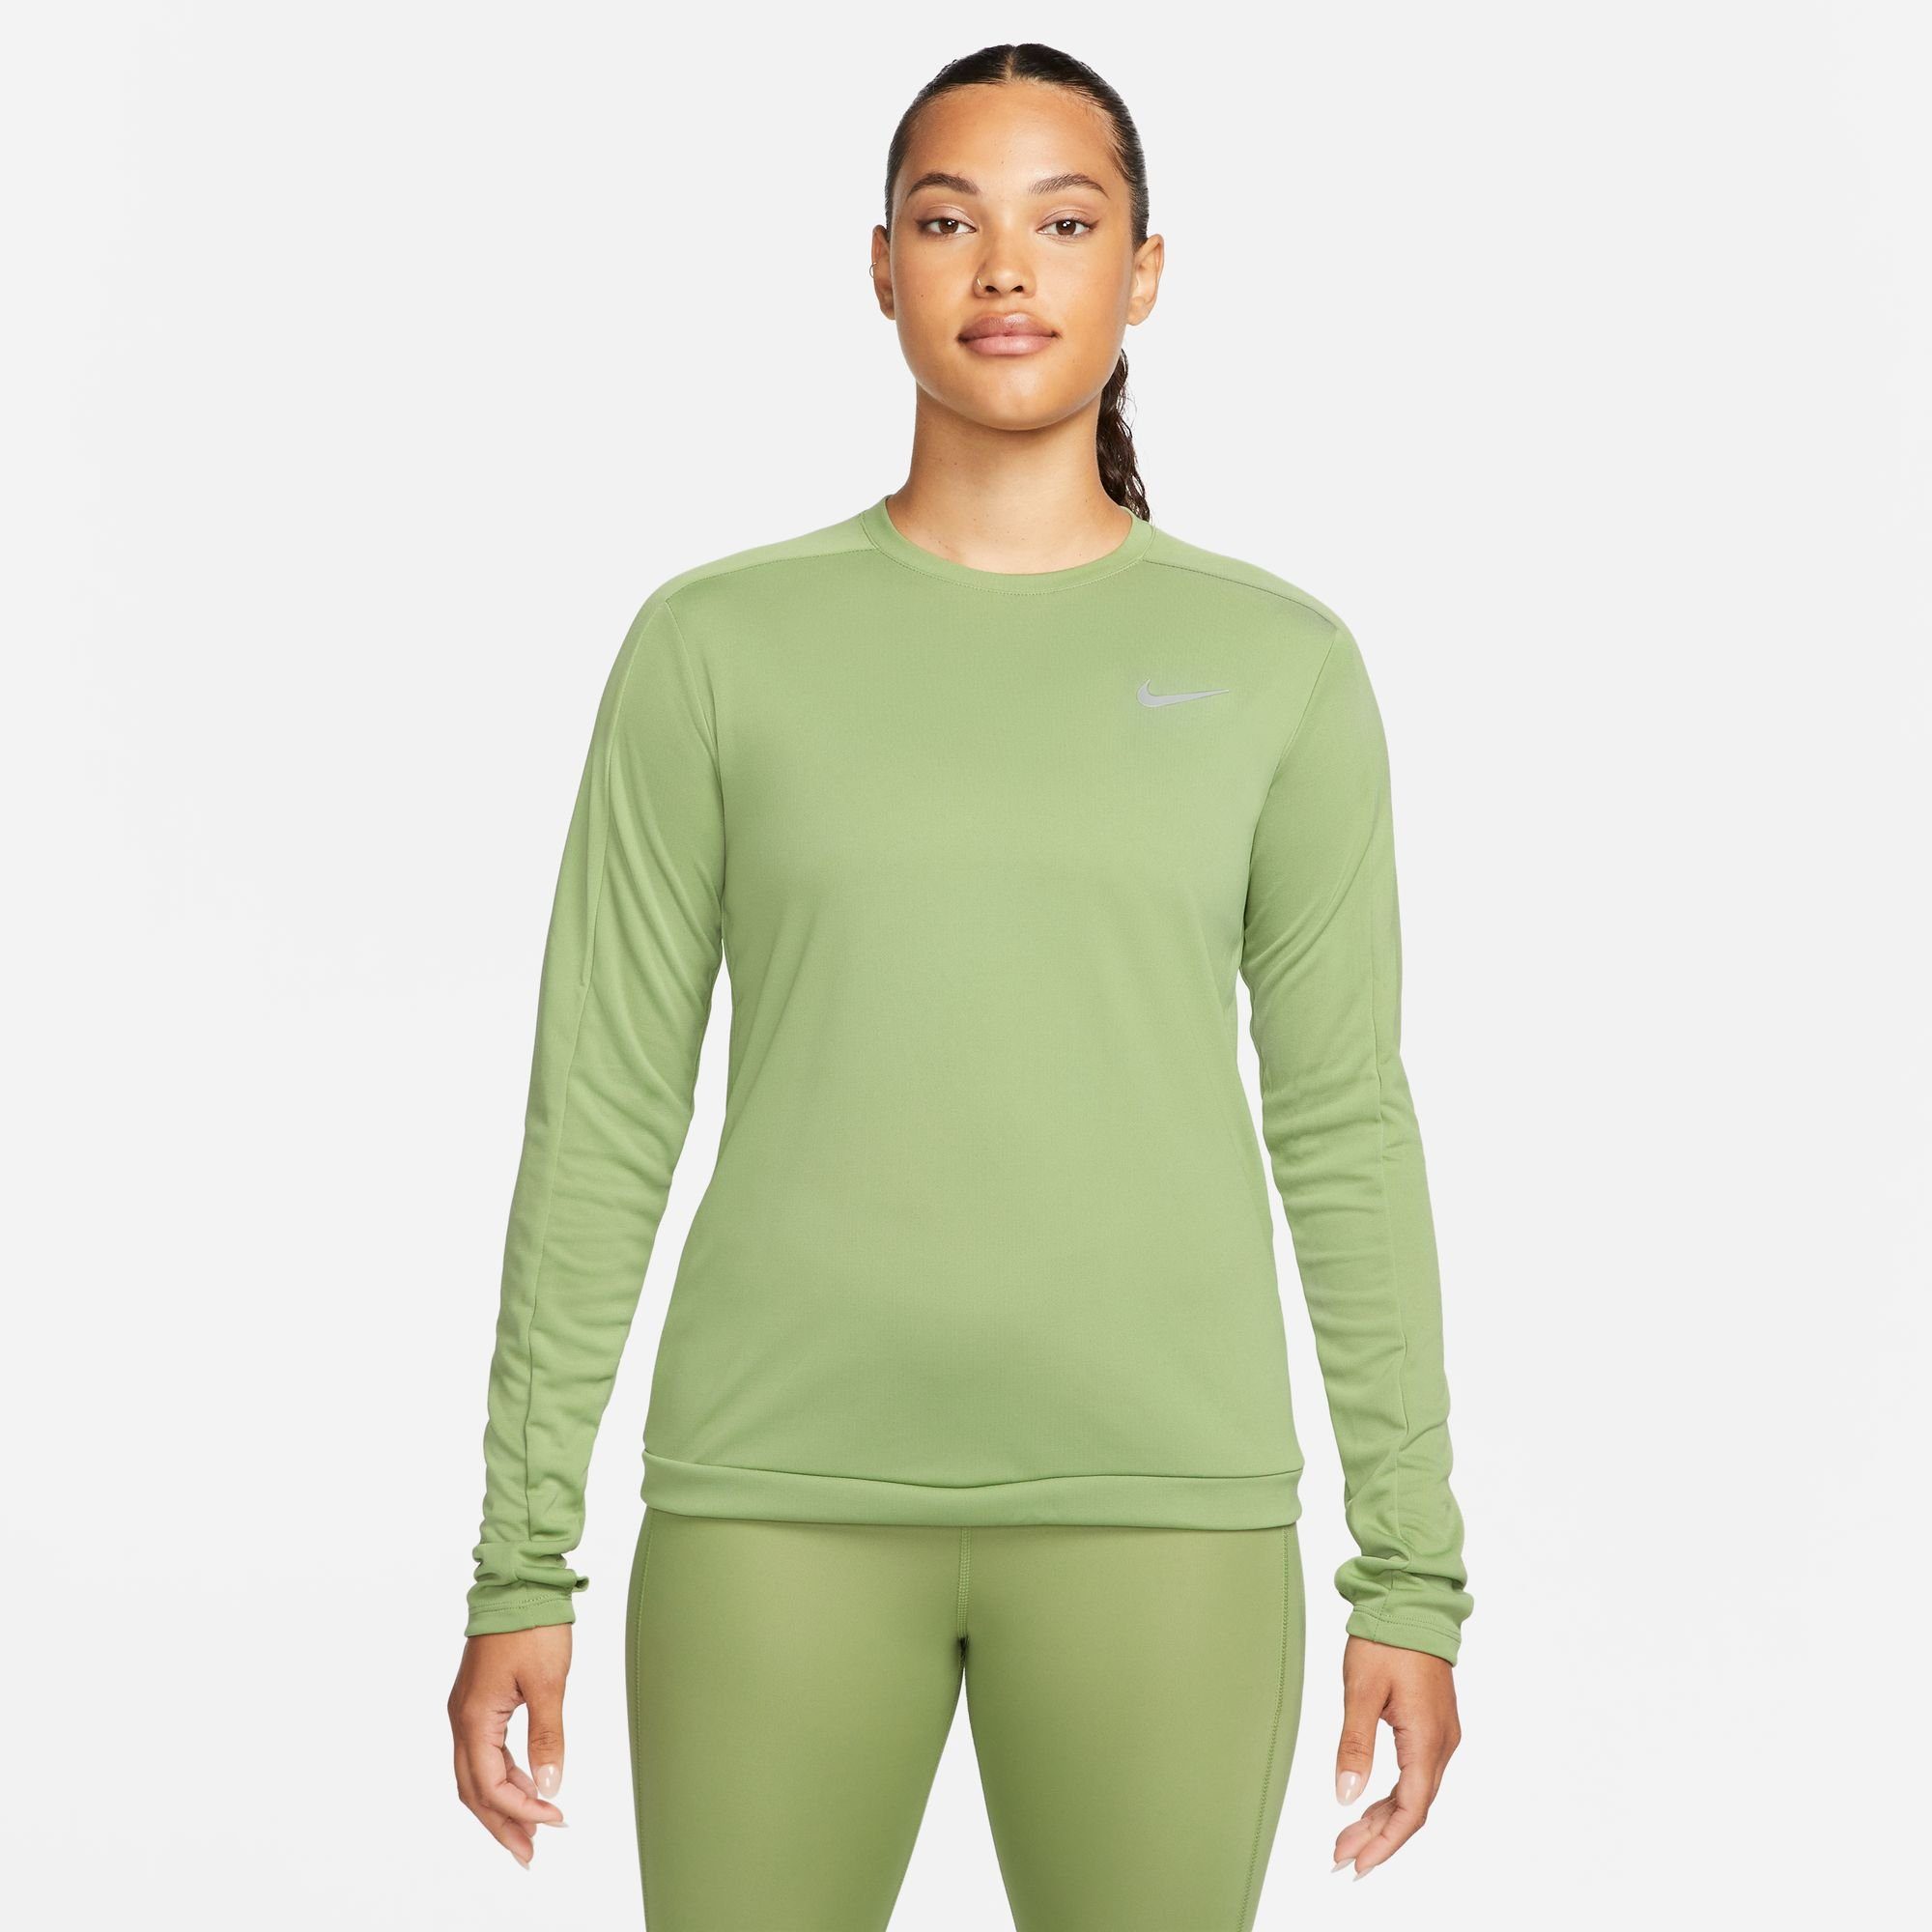 DRI-FIT RUNNING Nike WOMEN'S TOP grün Laufshirt CREW-NECK